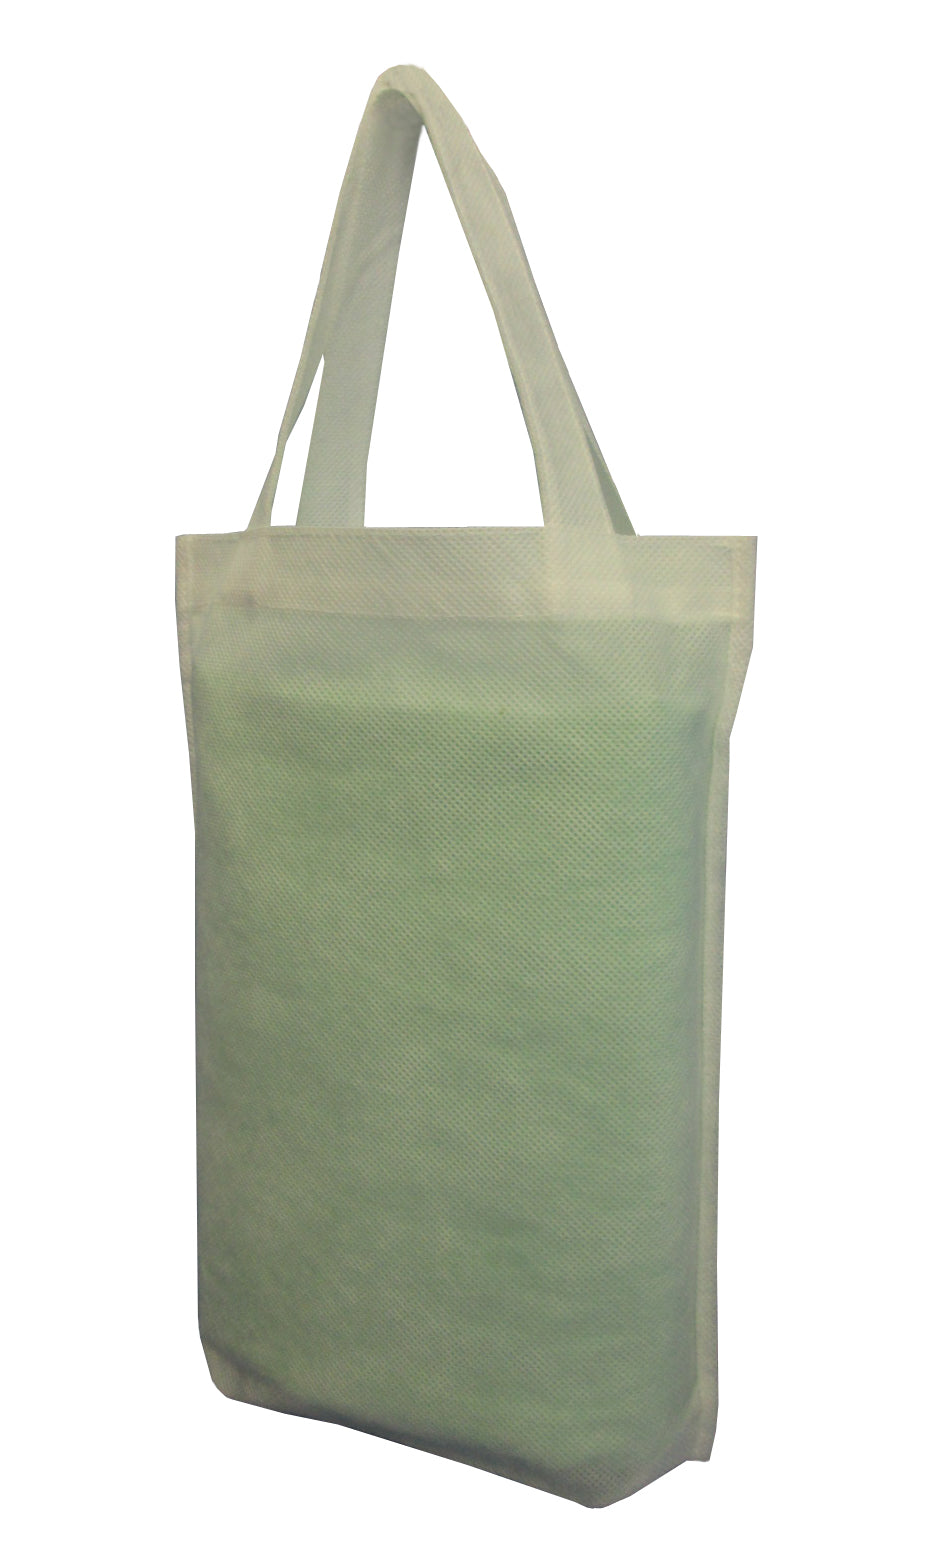 JLSB-0052 Sewn Bag